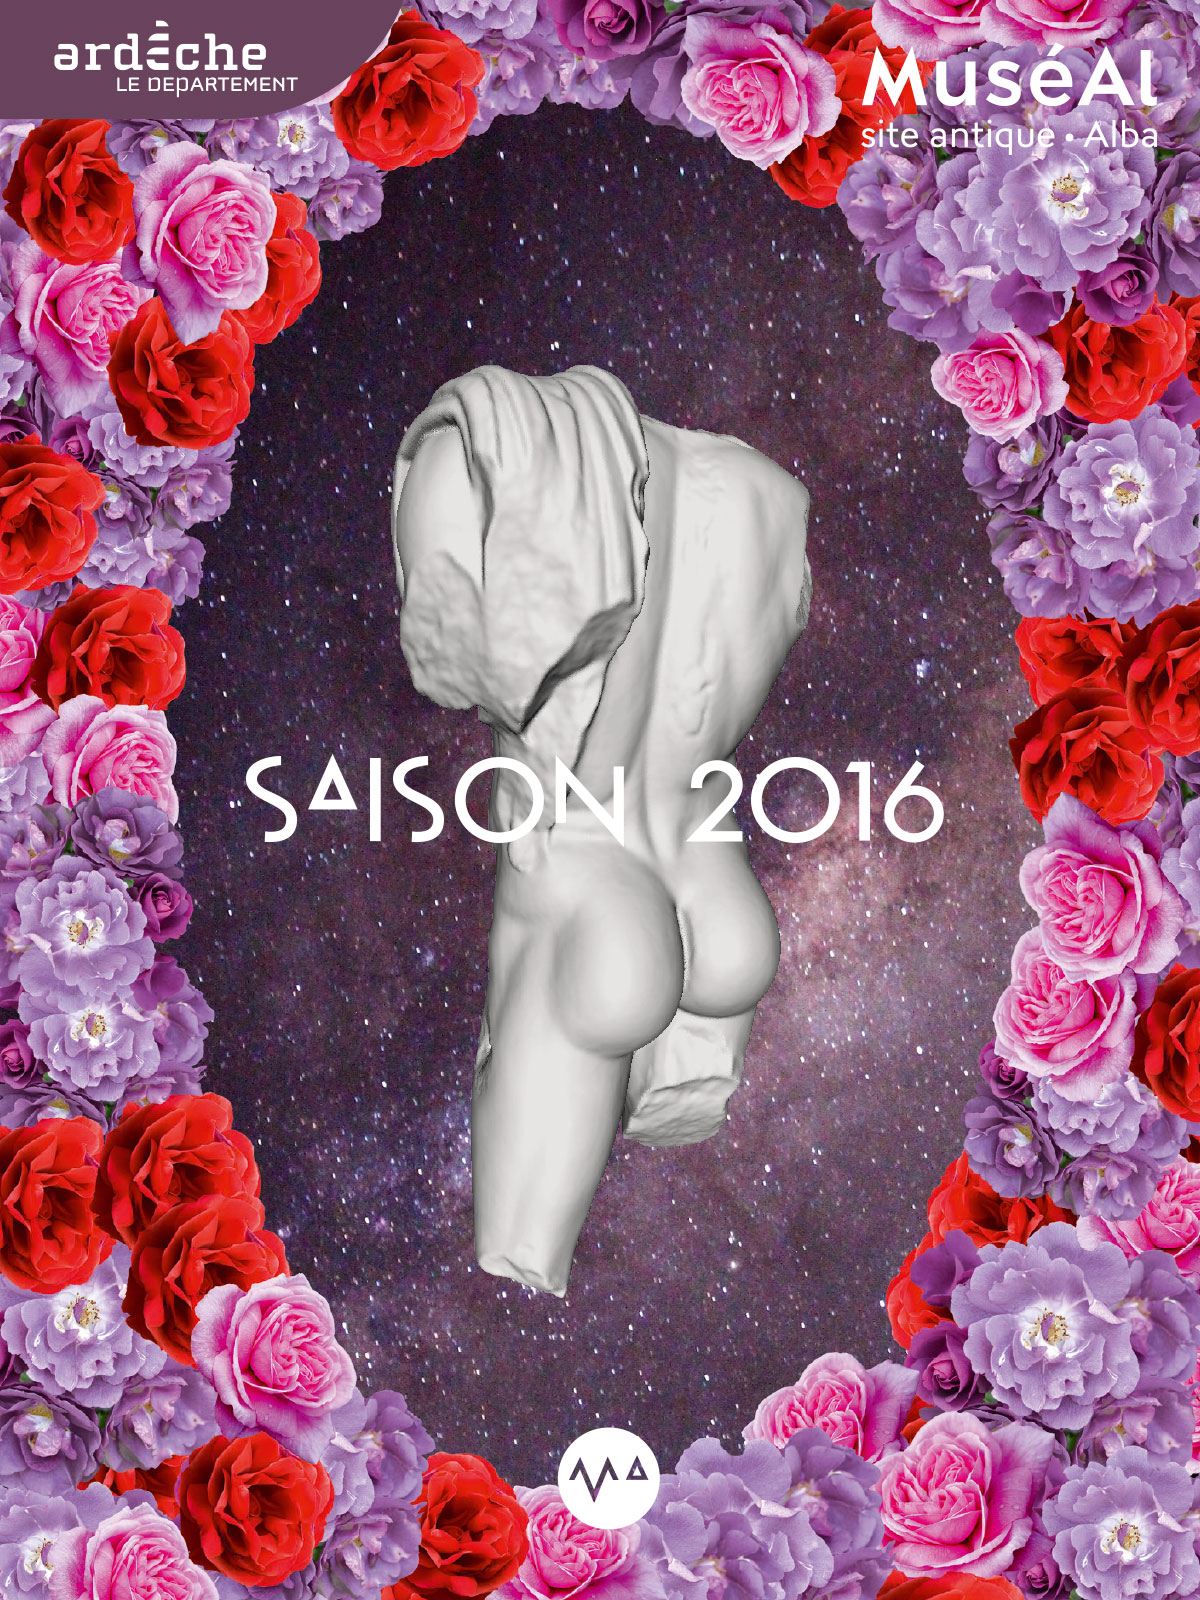 museal_saison_2016_1.jpg